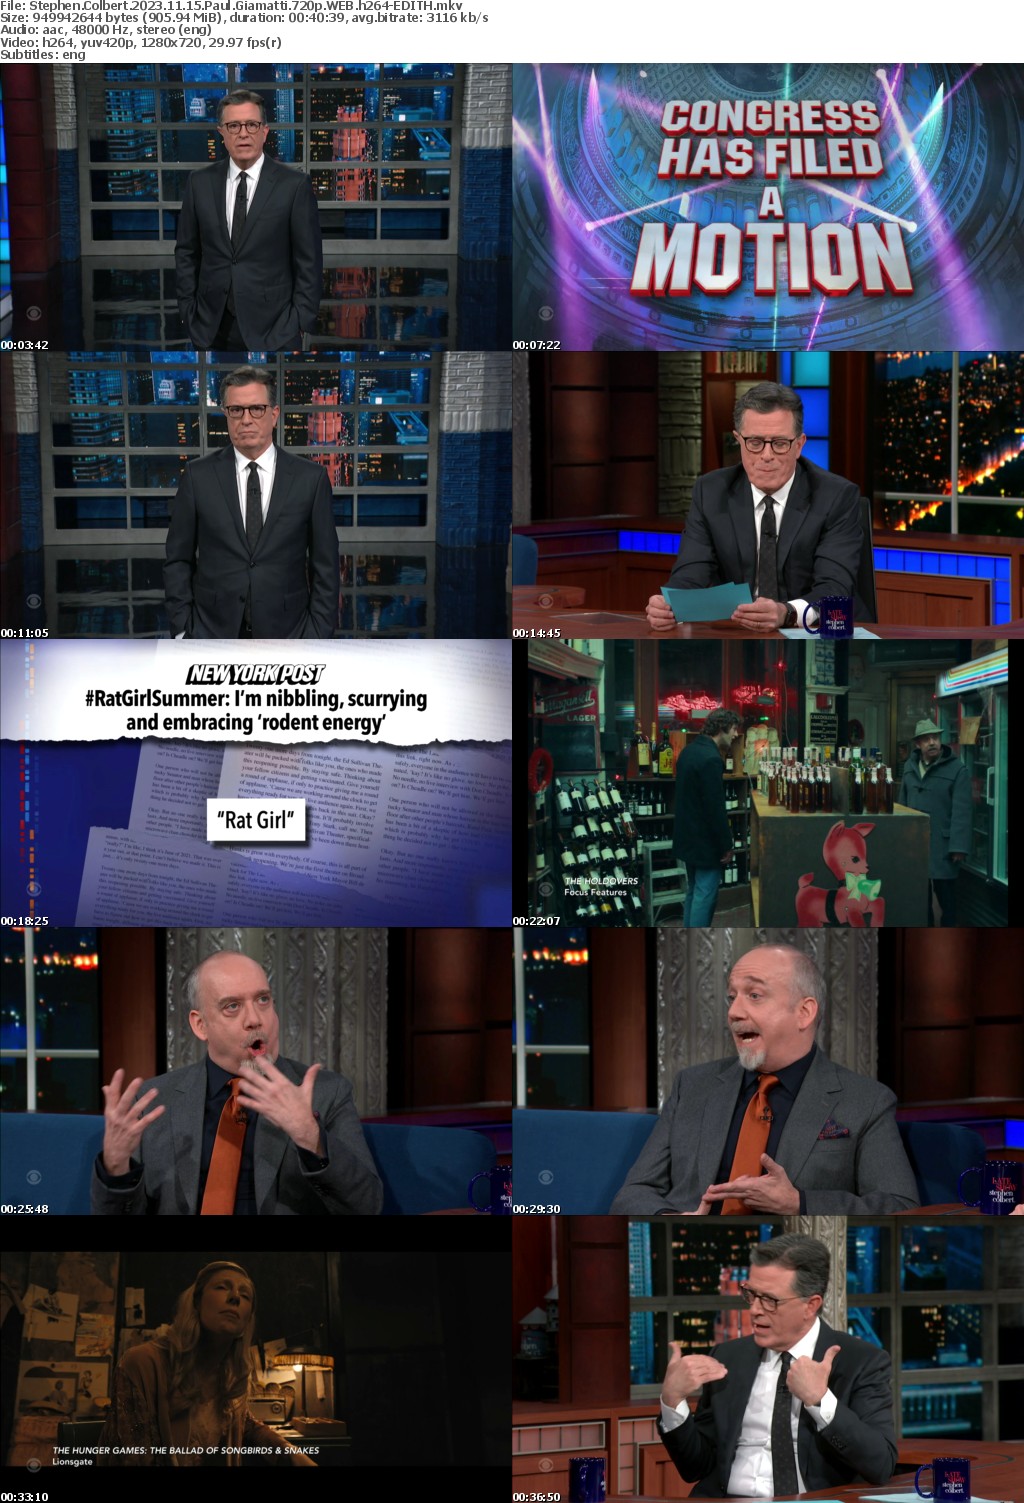 Stephen Colbert 2023 11 15 Paul Giamatti 720p WEB h264-EDITH